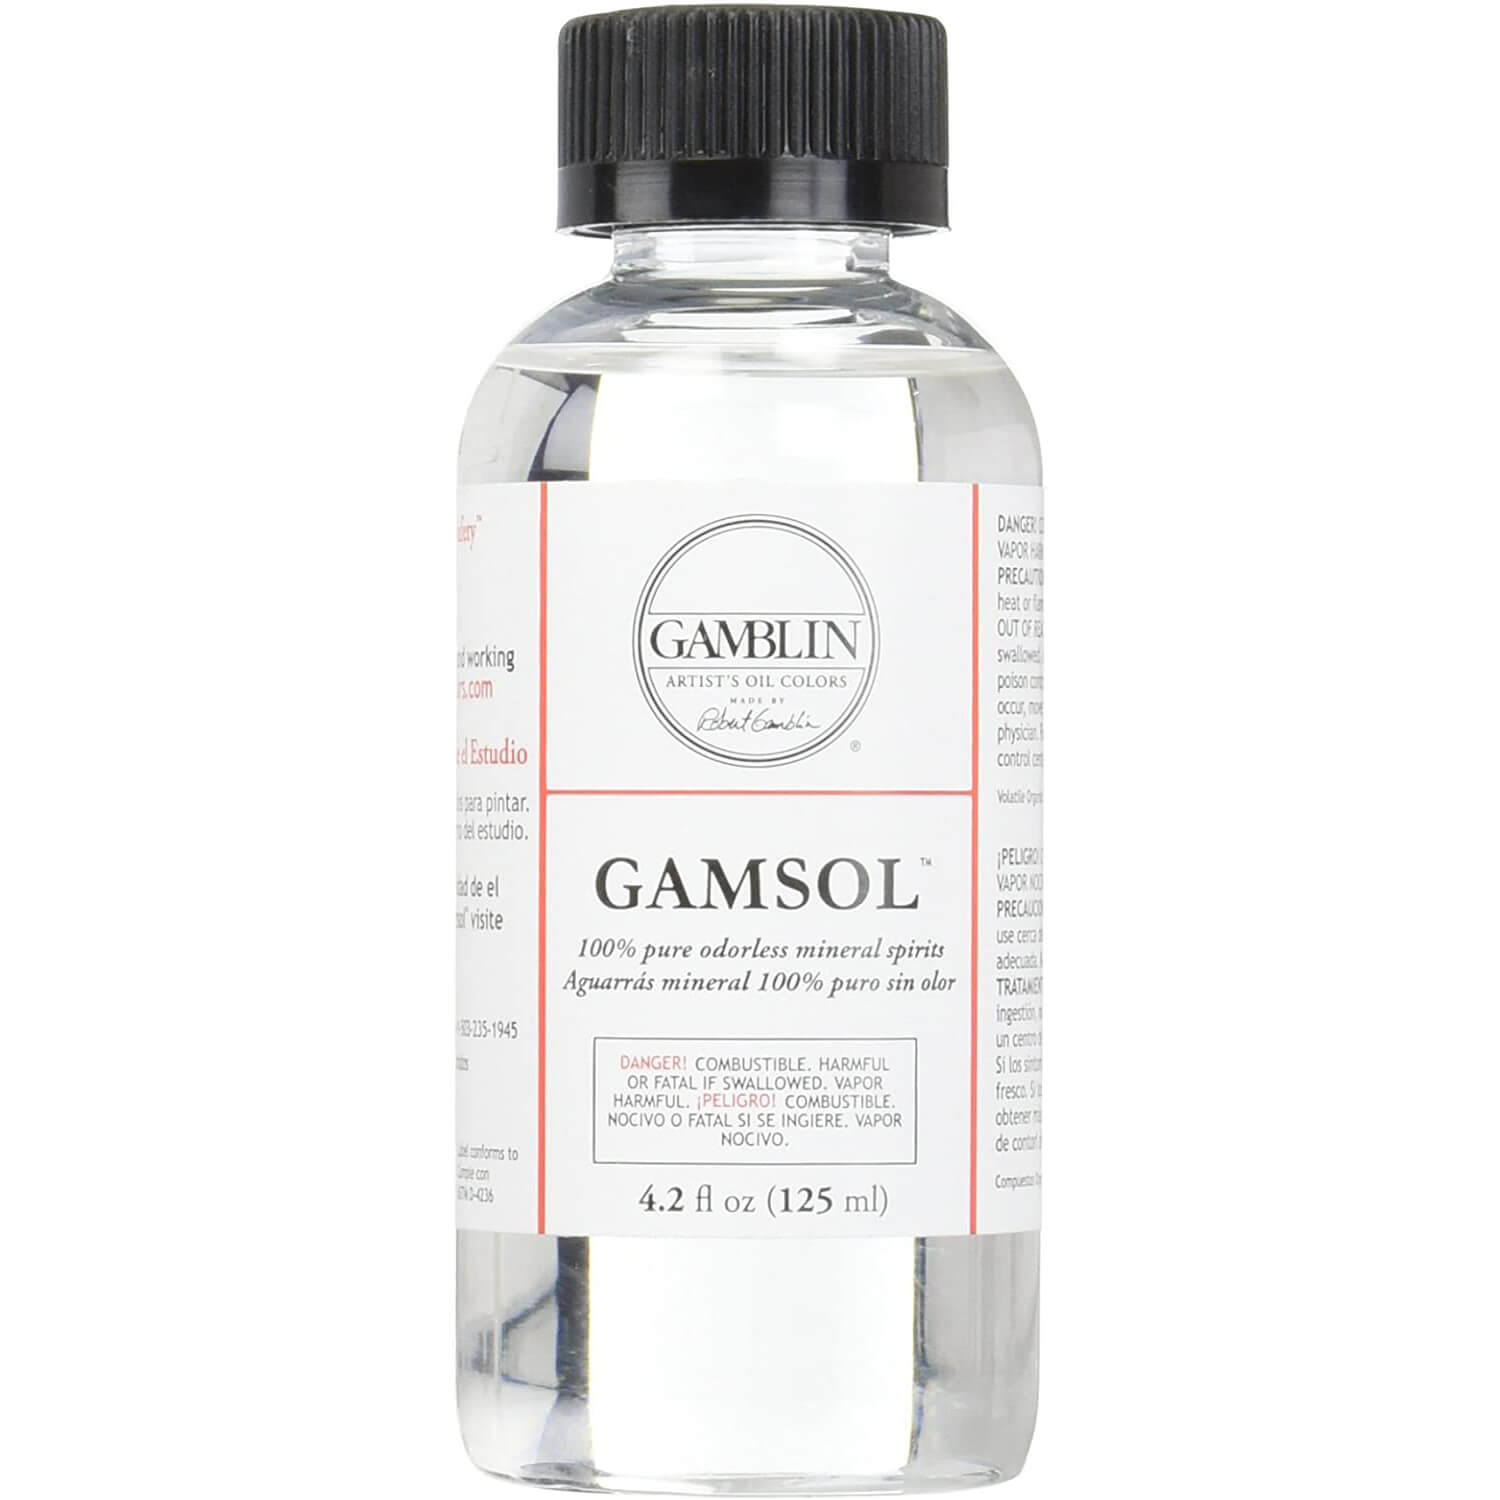 Gamblin Gamsol Odorless Mineral Spirits Bottle